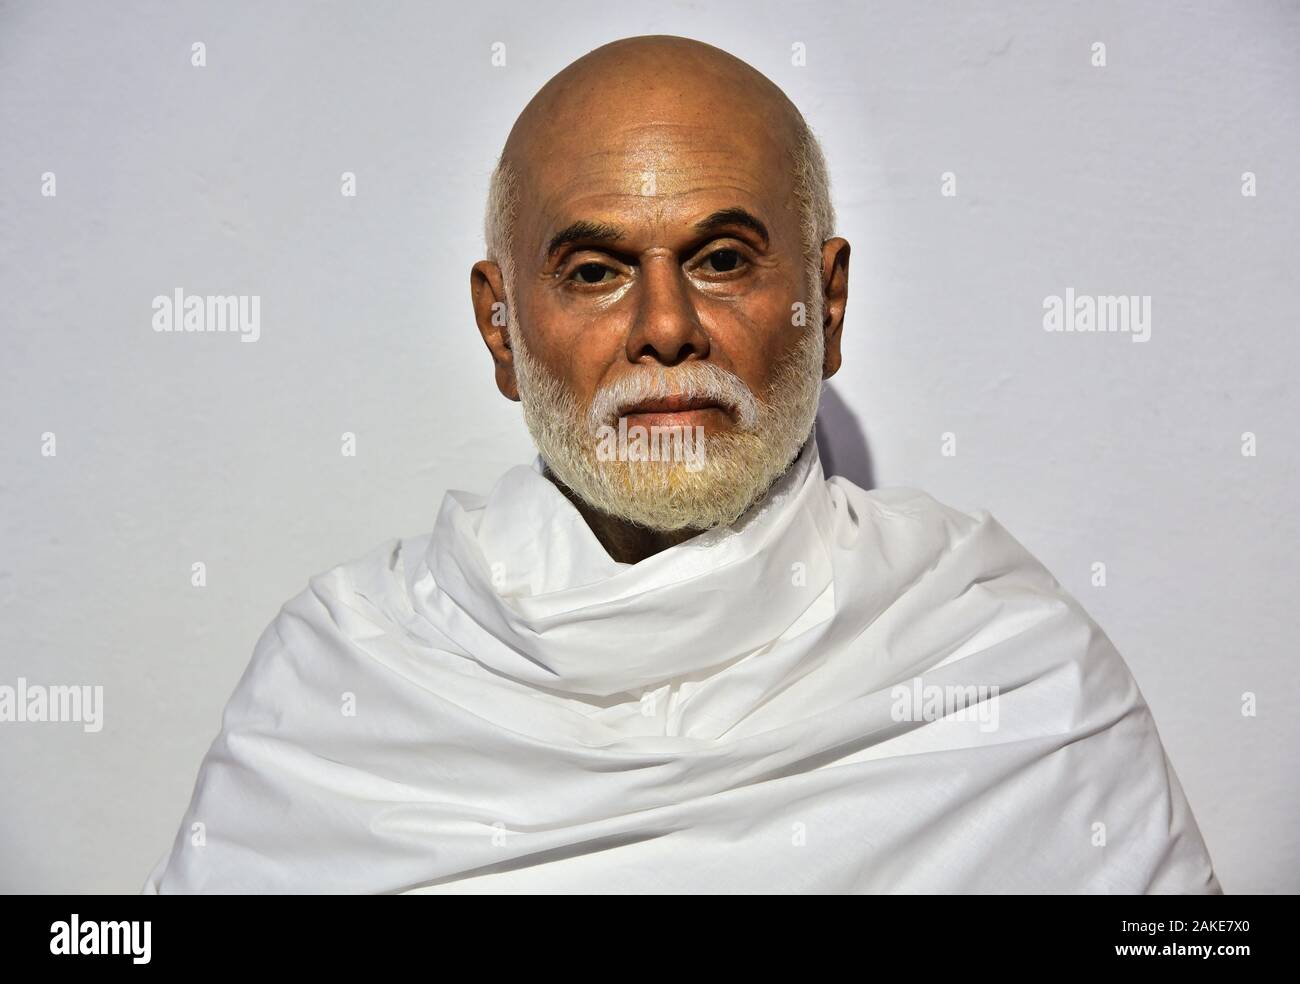 wax statue of sree narayana guru, the spiritual and social reformer of kerala,india Stock Photo